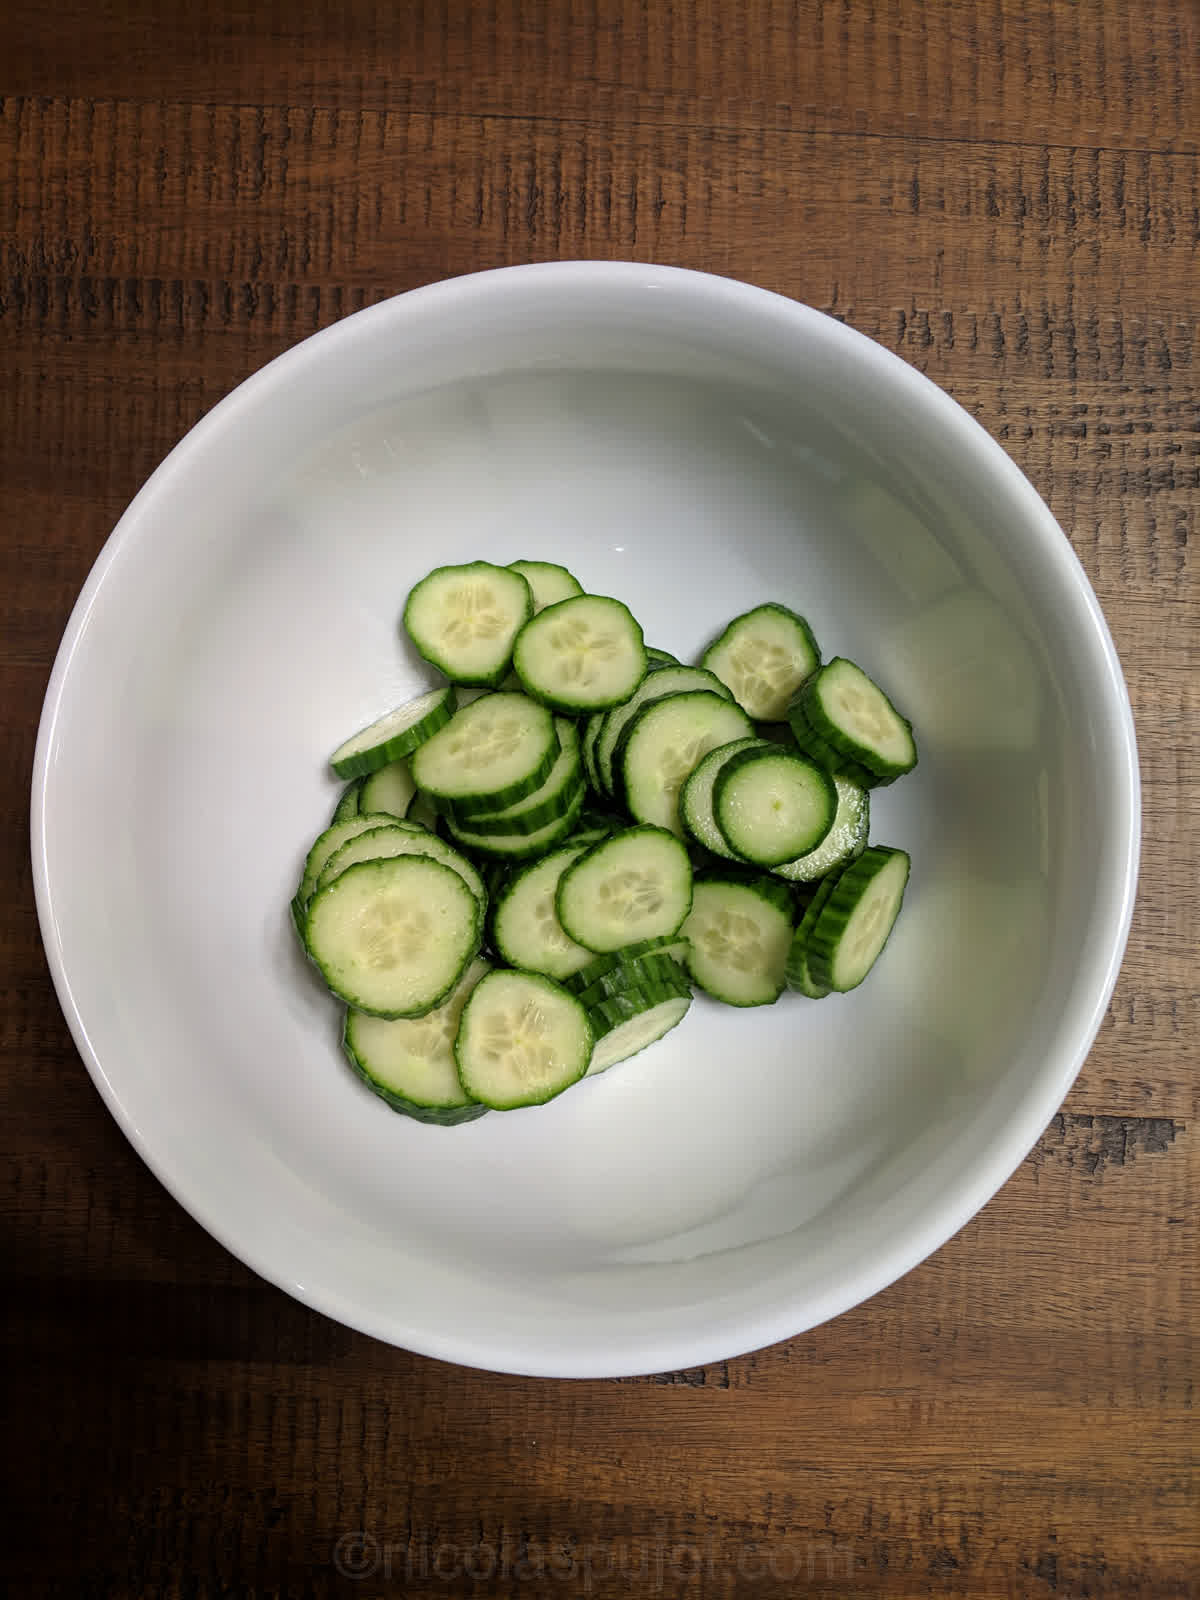 Oil-free cucumber and sweet potato salad - Salads 